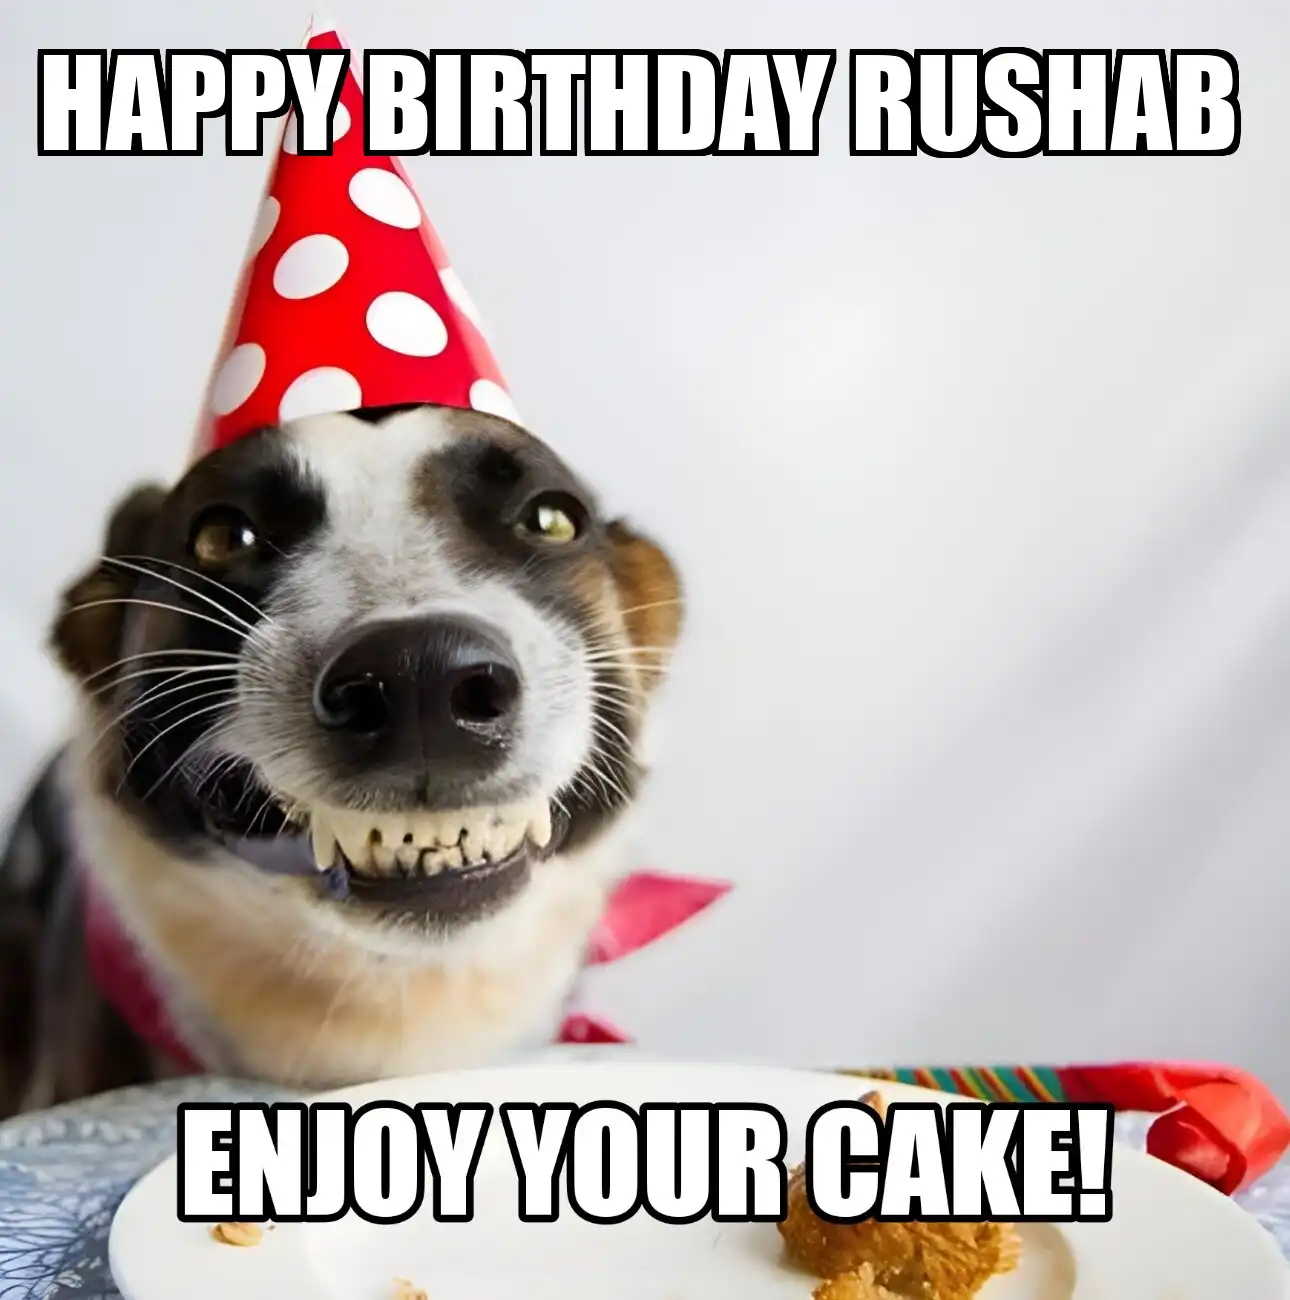 Happy Birthday Rushab Enjoy Your Cake Dog Meme